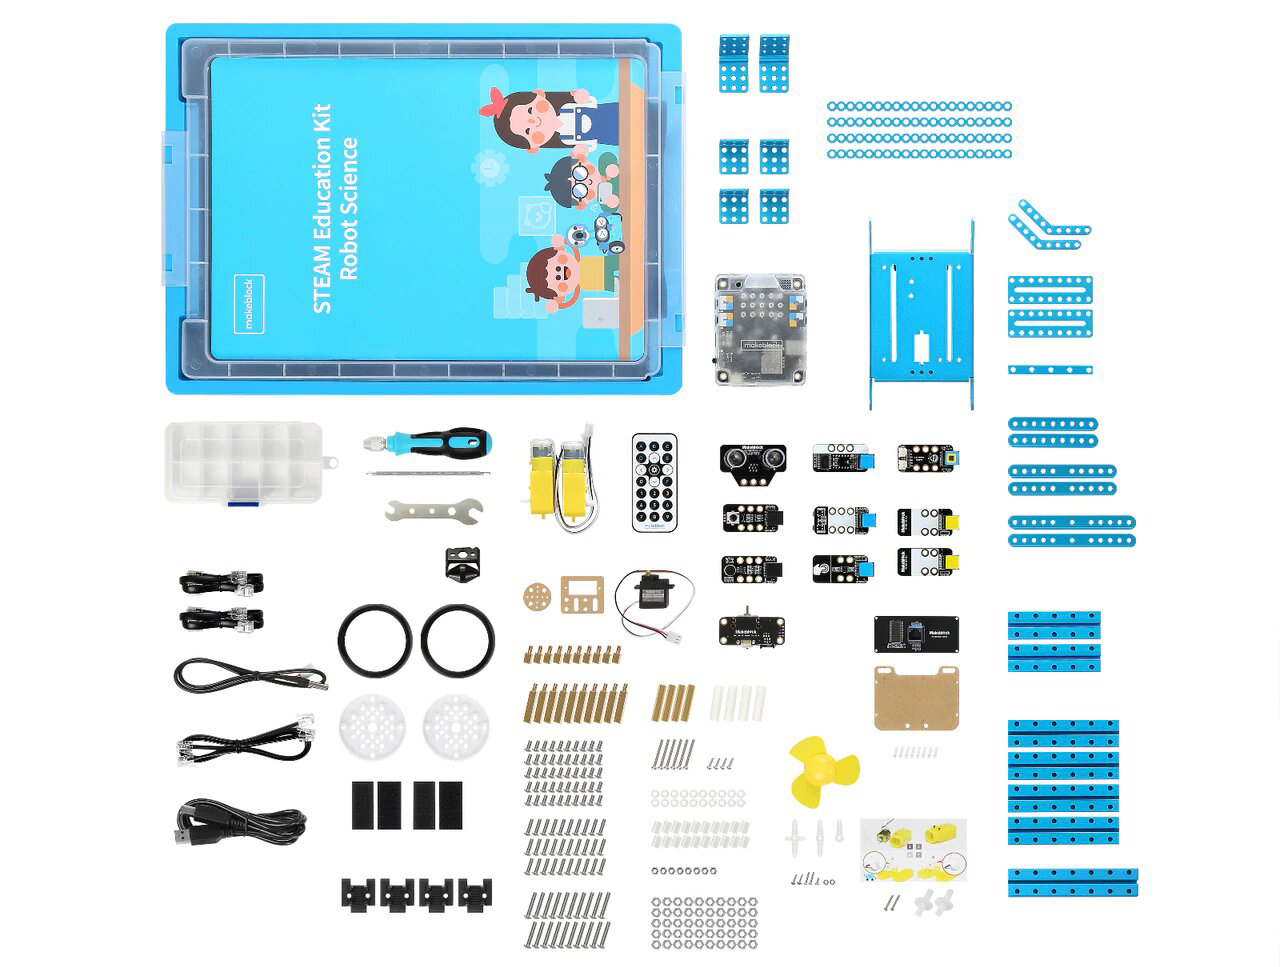 Makeblock STEAM Robot Science Education Kit - Click to Enlarge